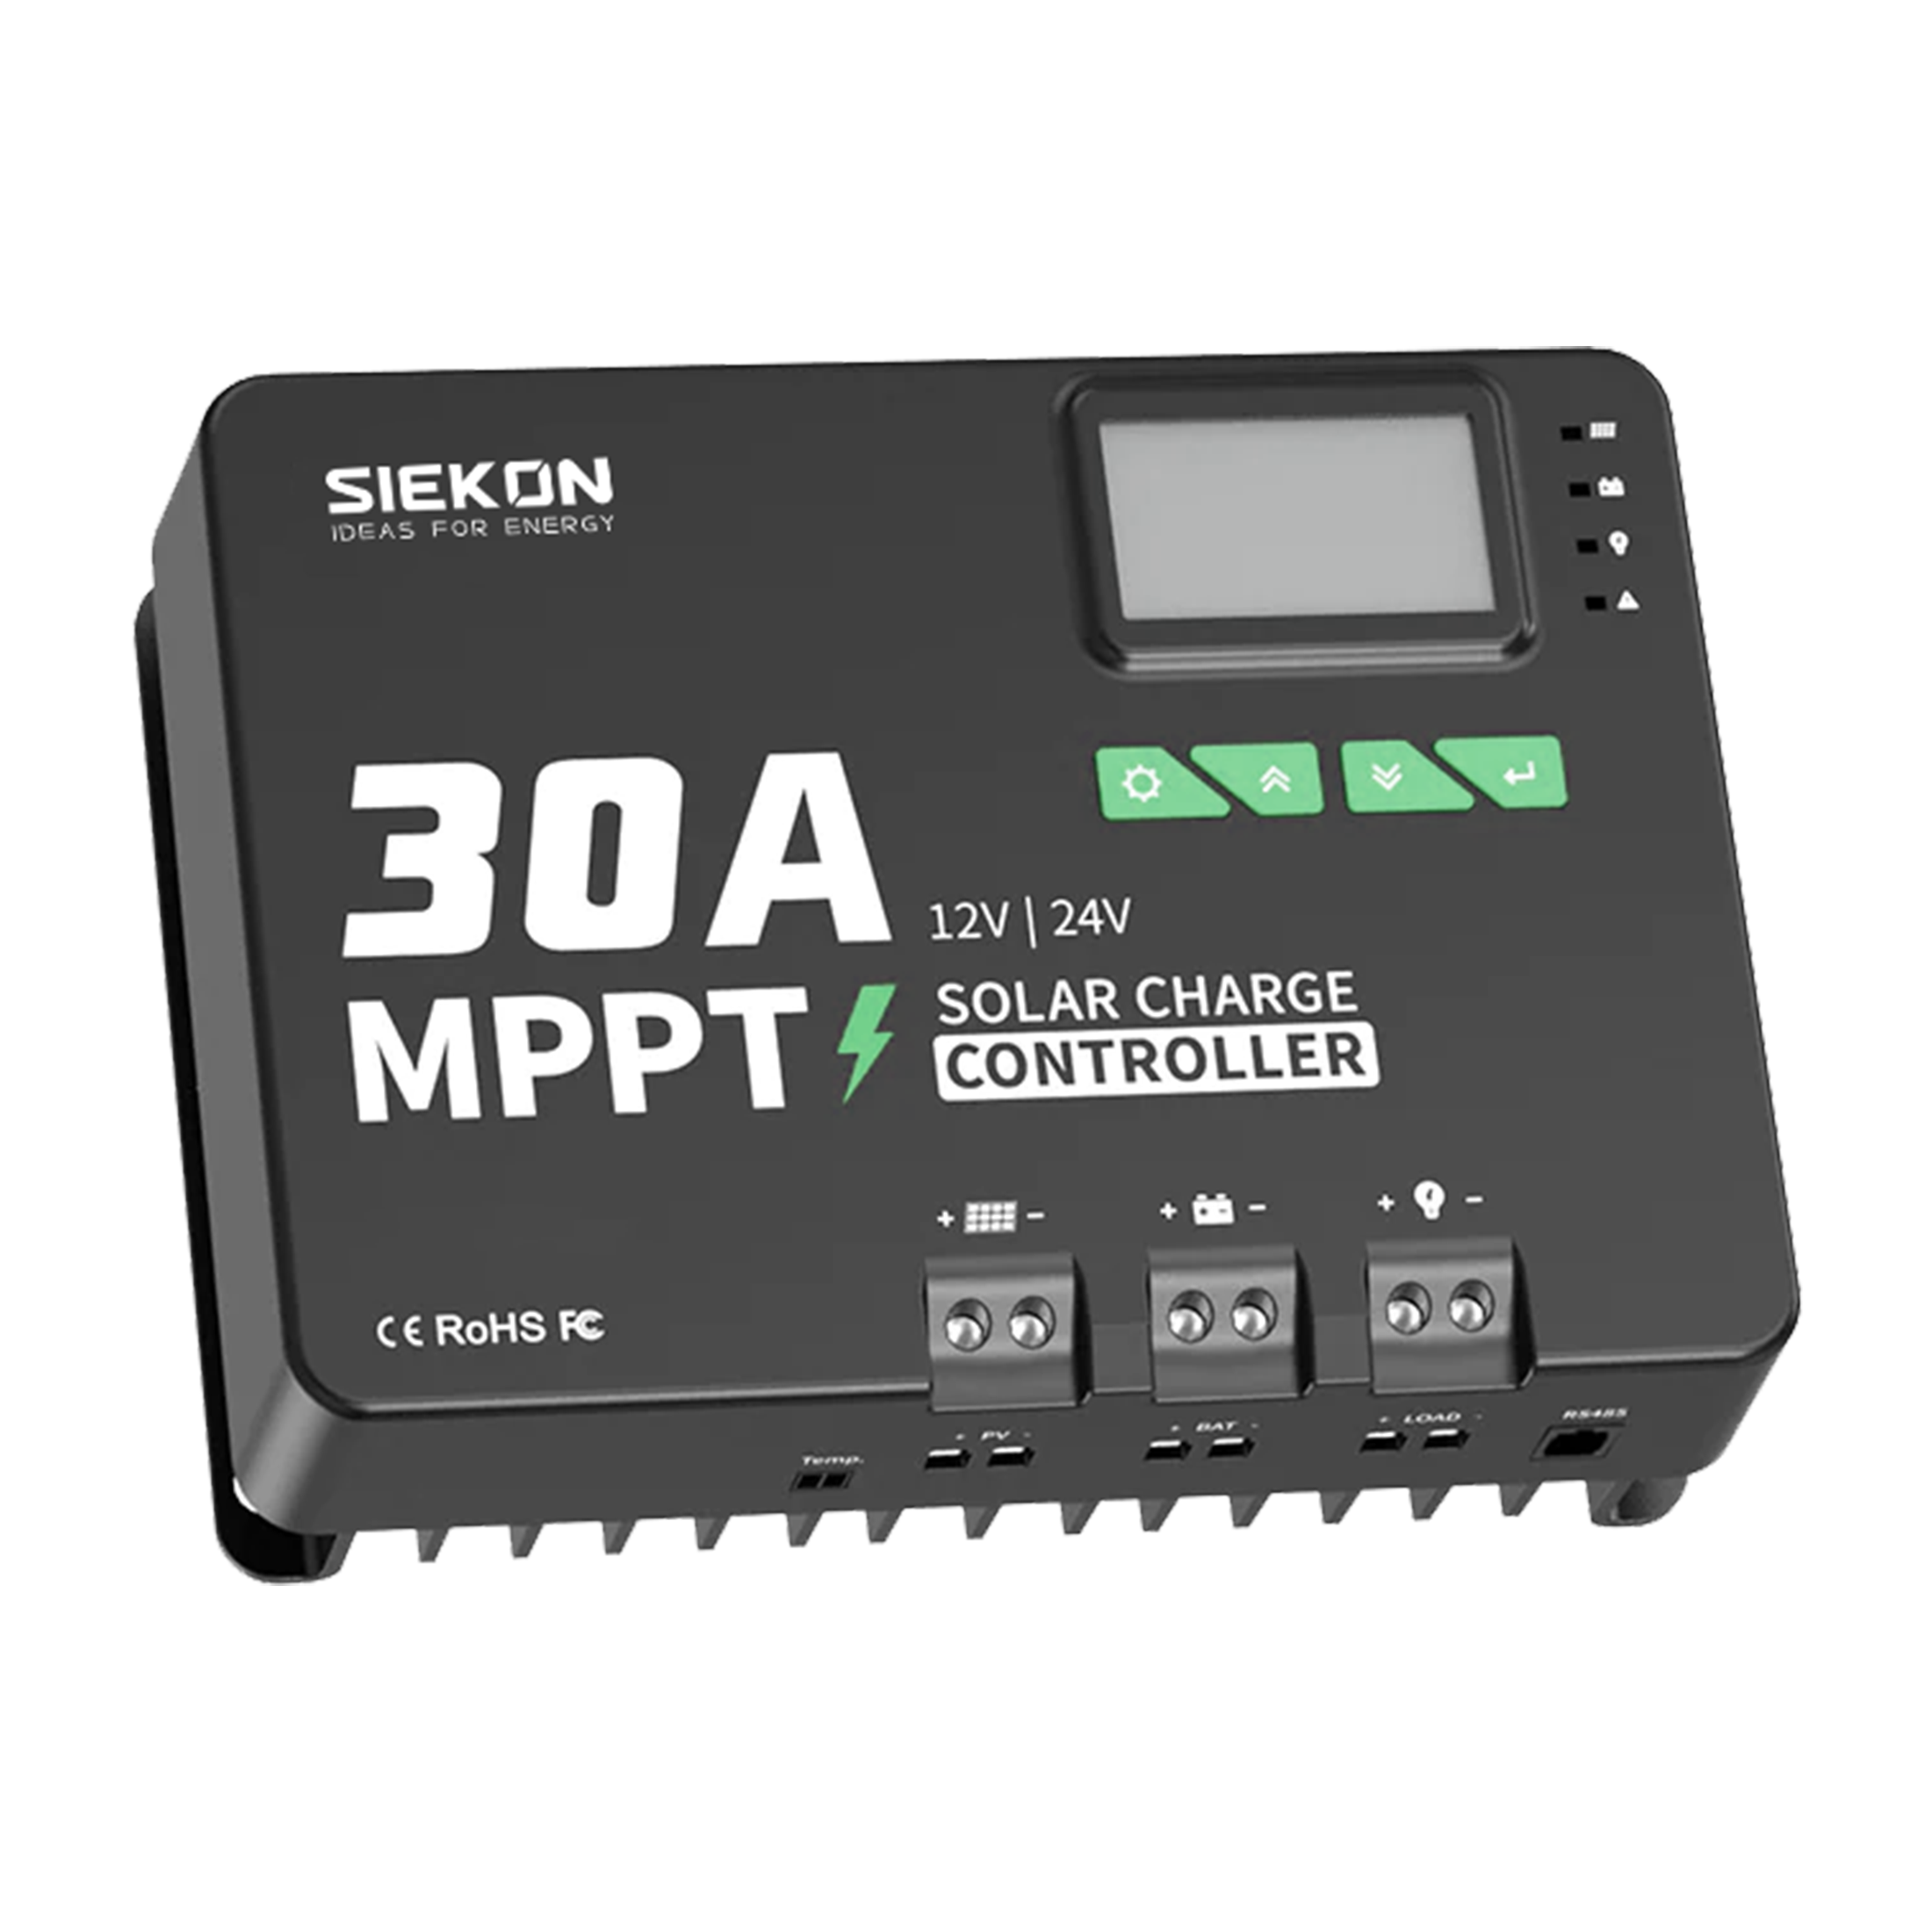 Siekon 30A 12V/24V MPPT Solar Charge Controller